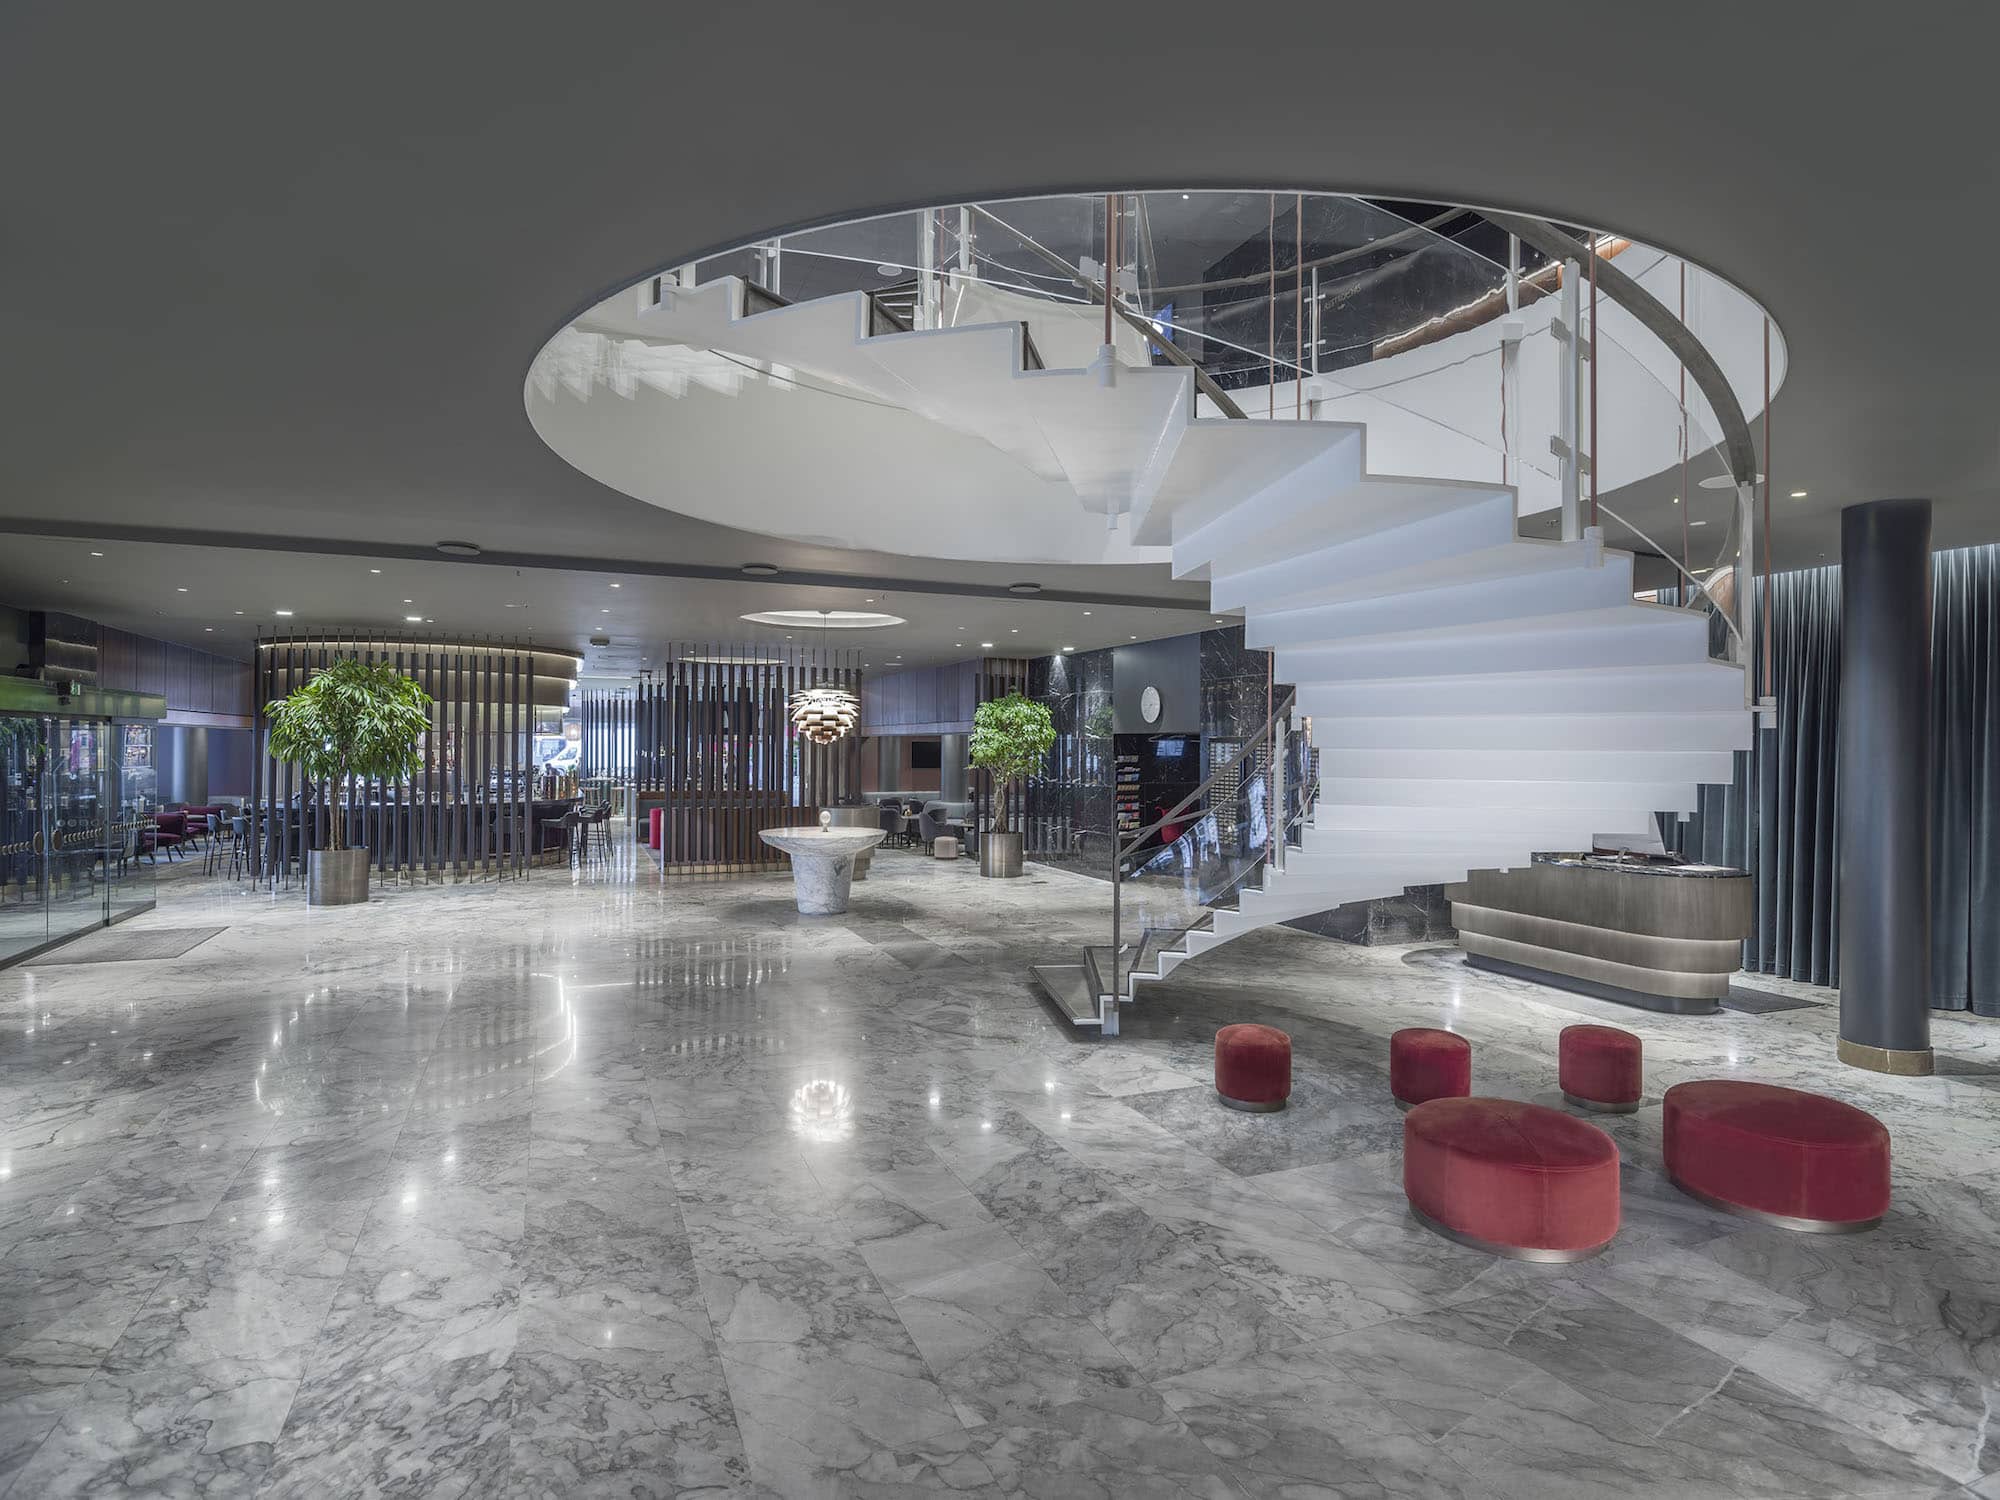 The lobby of the Radisson Blu Royal Hotel in Copenhagen designed by Arne Jacobsen